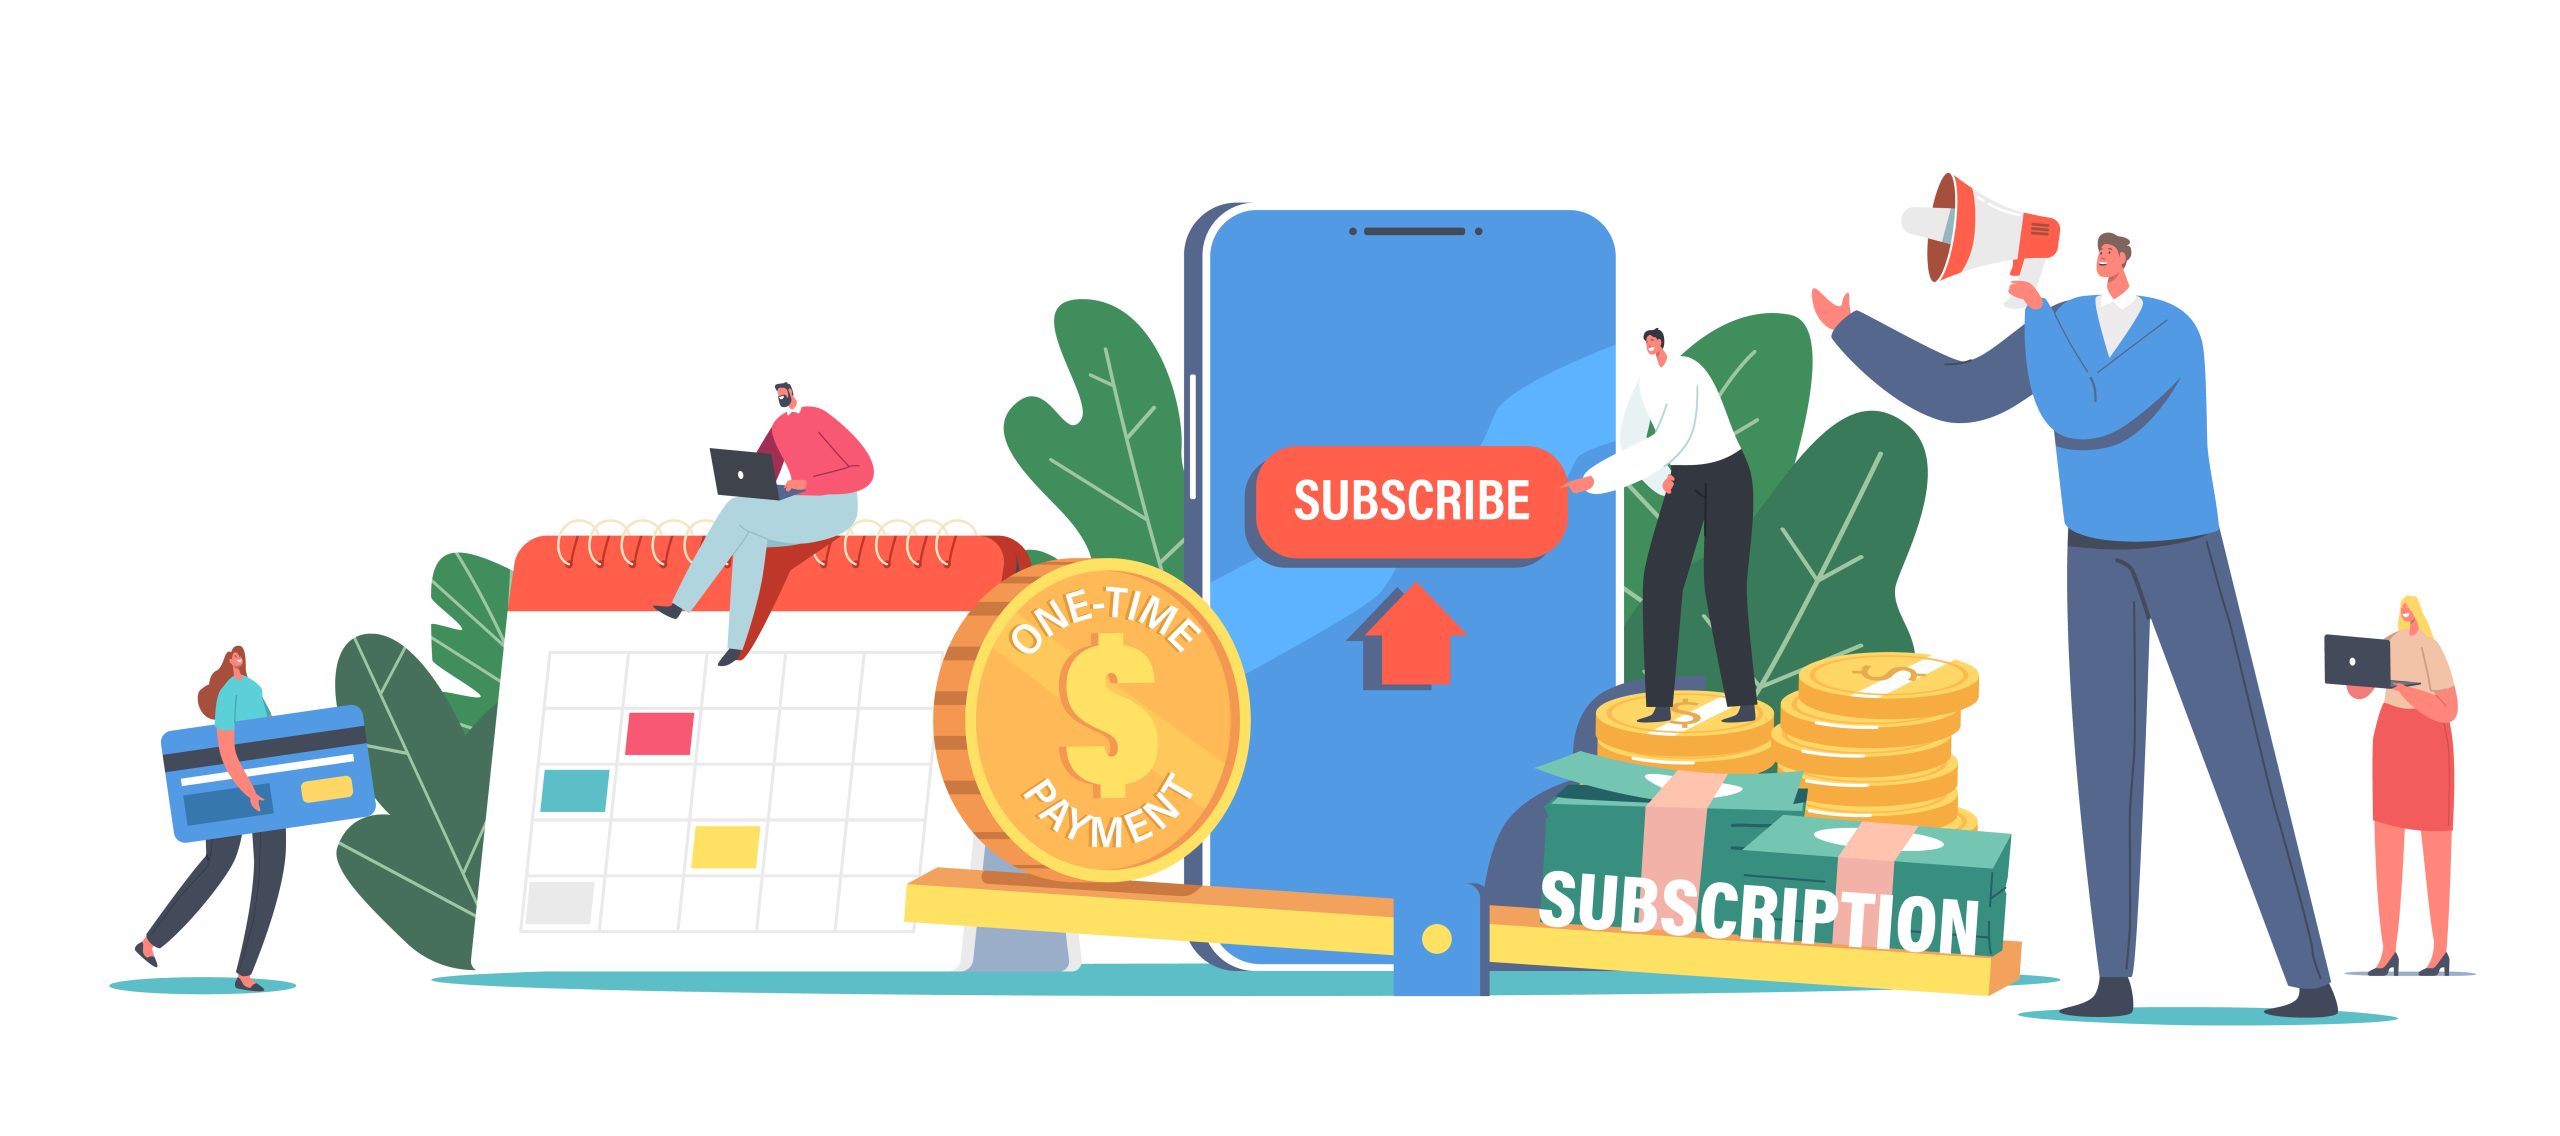 subscription-based business model